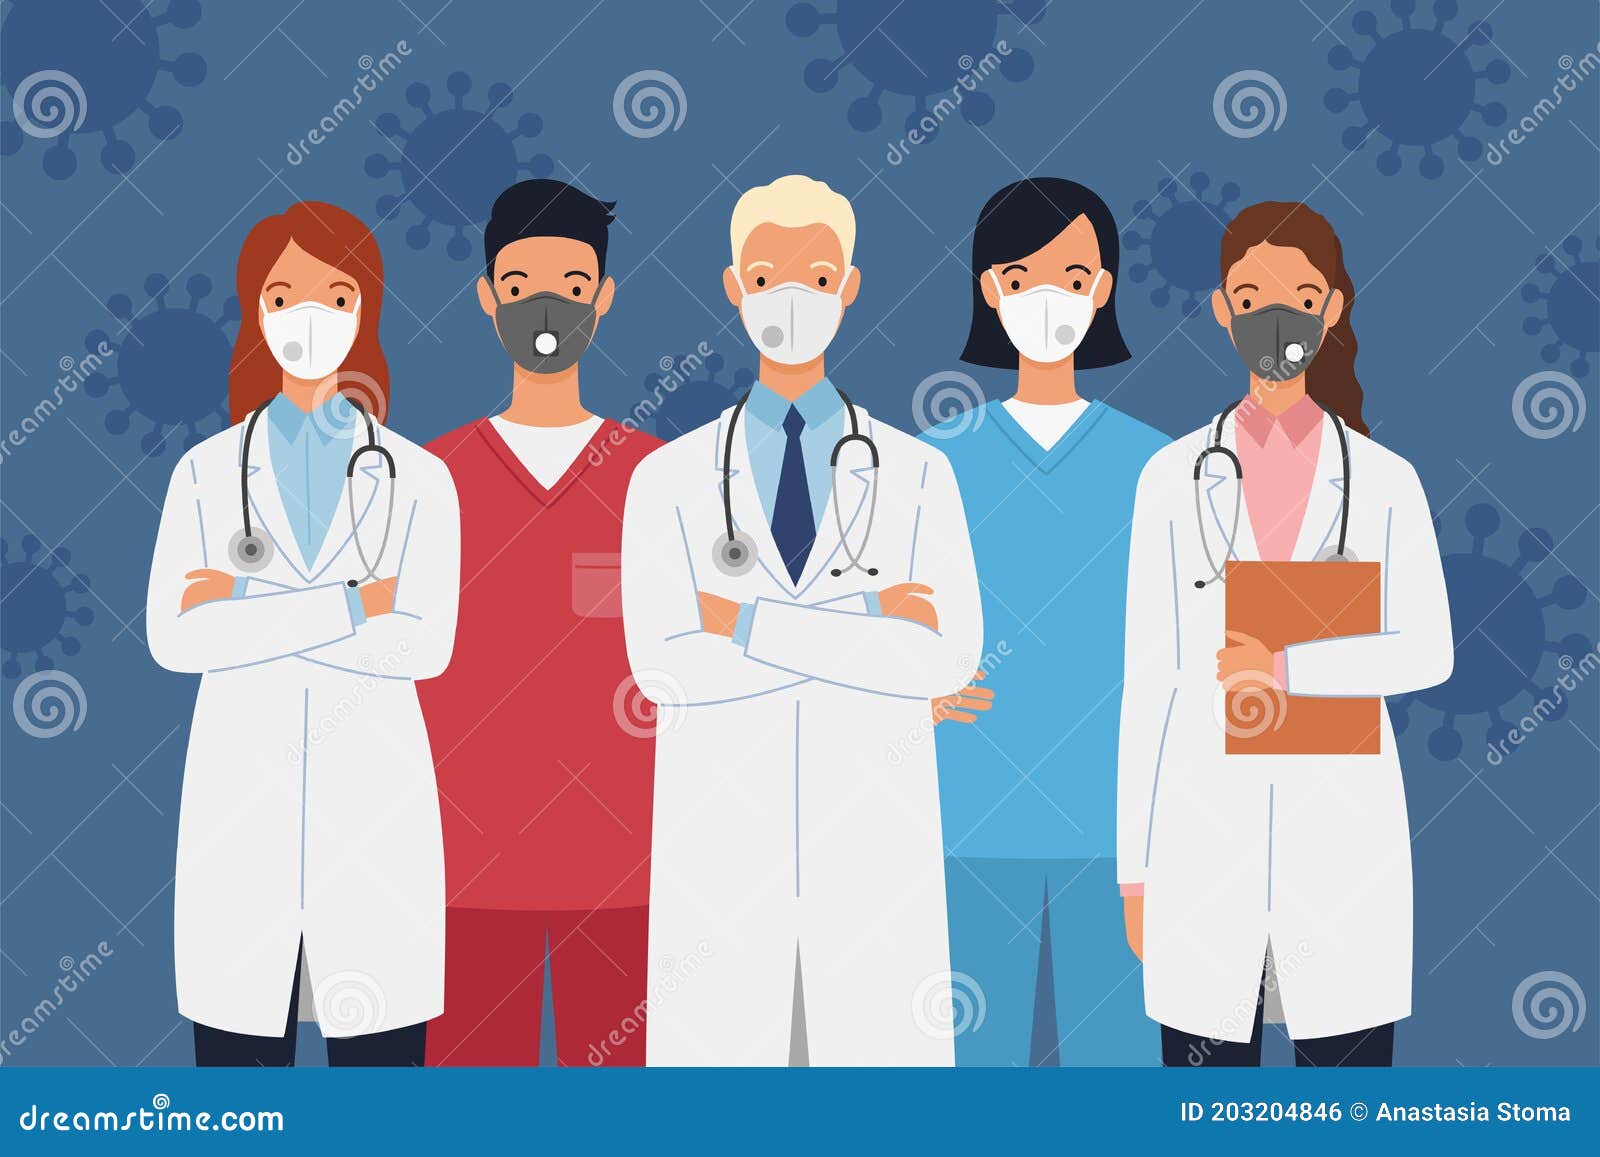 Medical Staff of Doctors and Nurses Wearing Protective Medical Masks ...